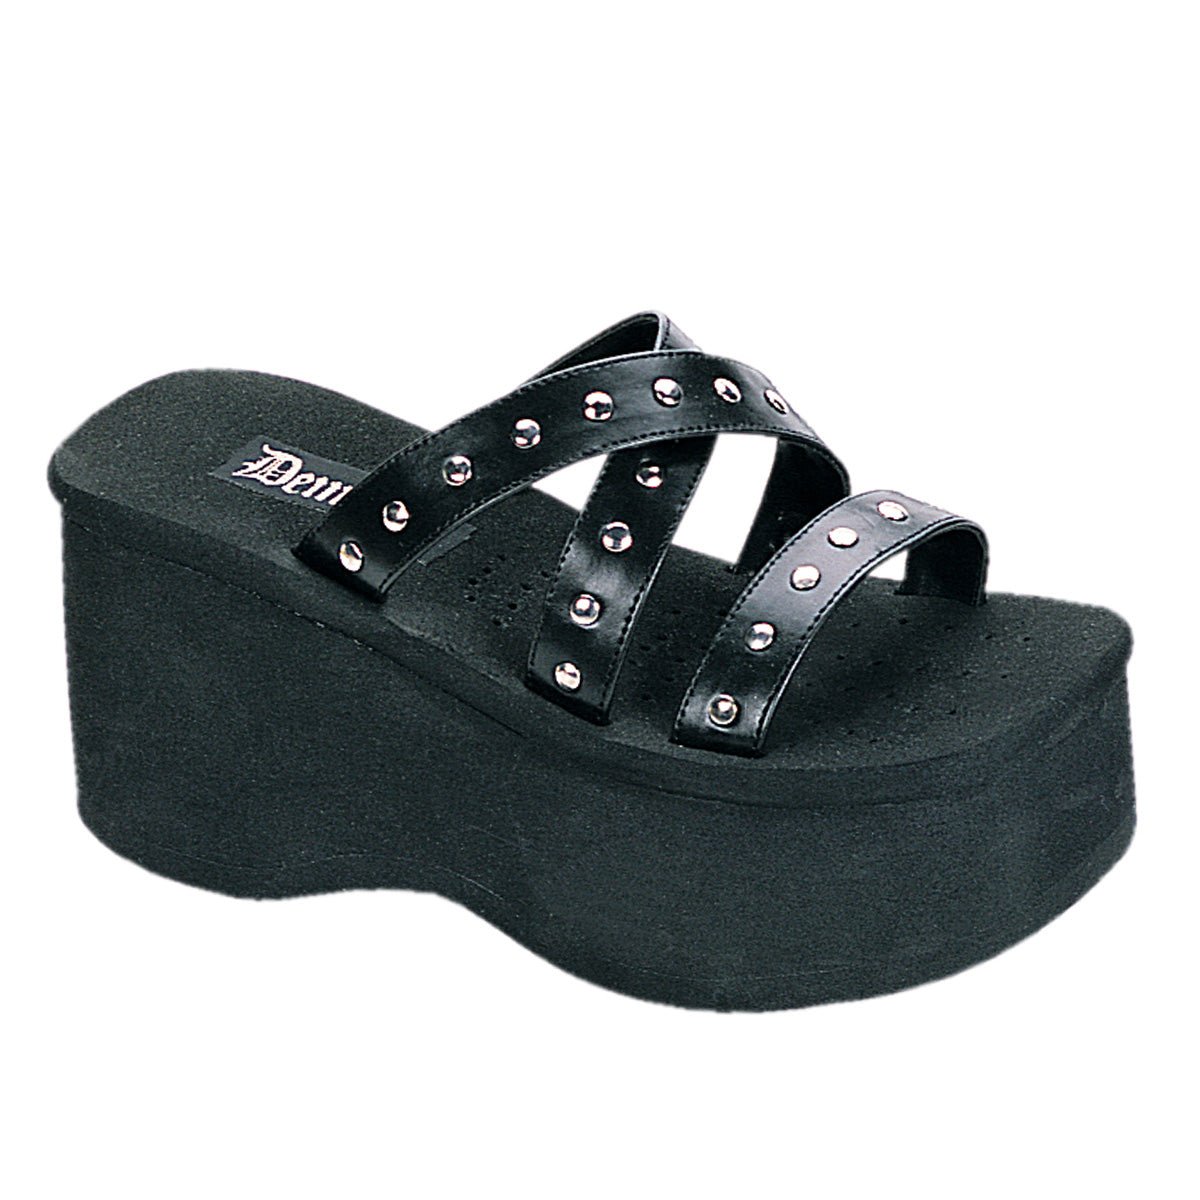 DemoniaCult FUNN 19 Sandals,Mules/Slip-Ons - From DemoniaCult Sold By Alternative Footwear